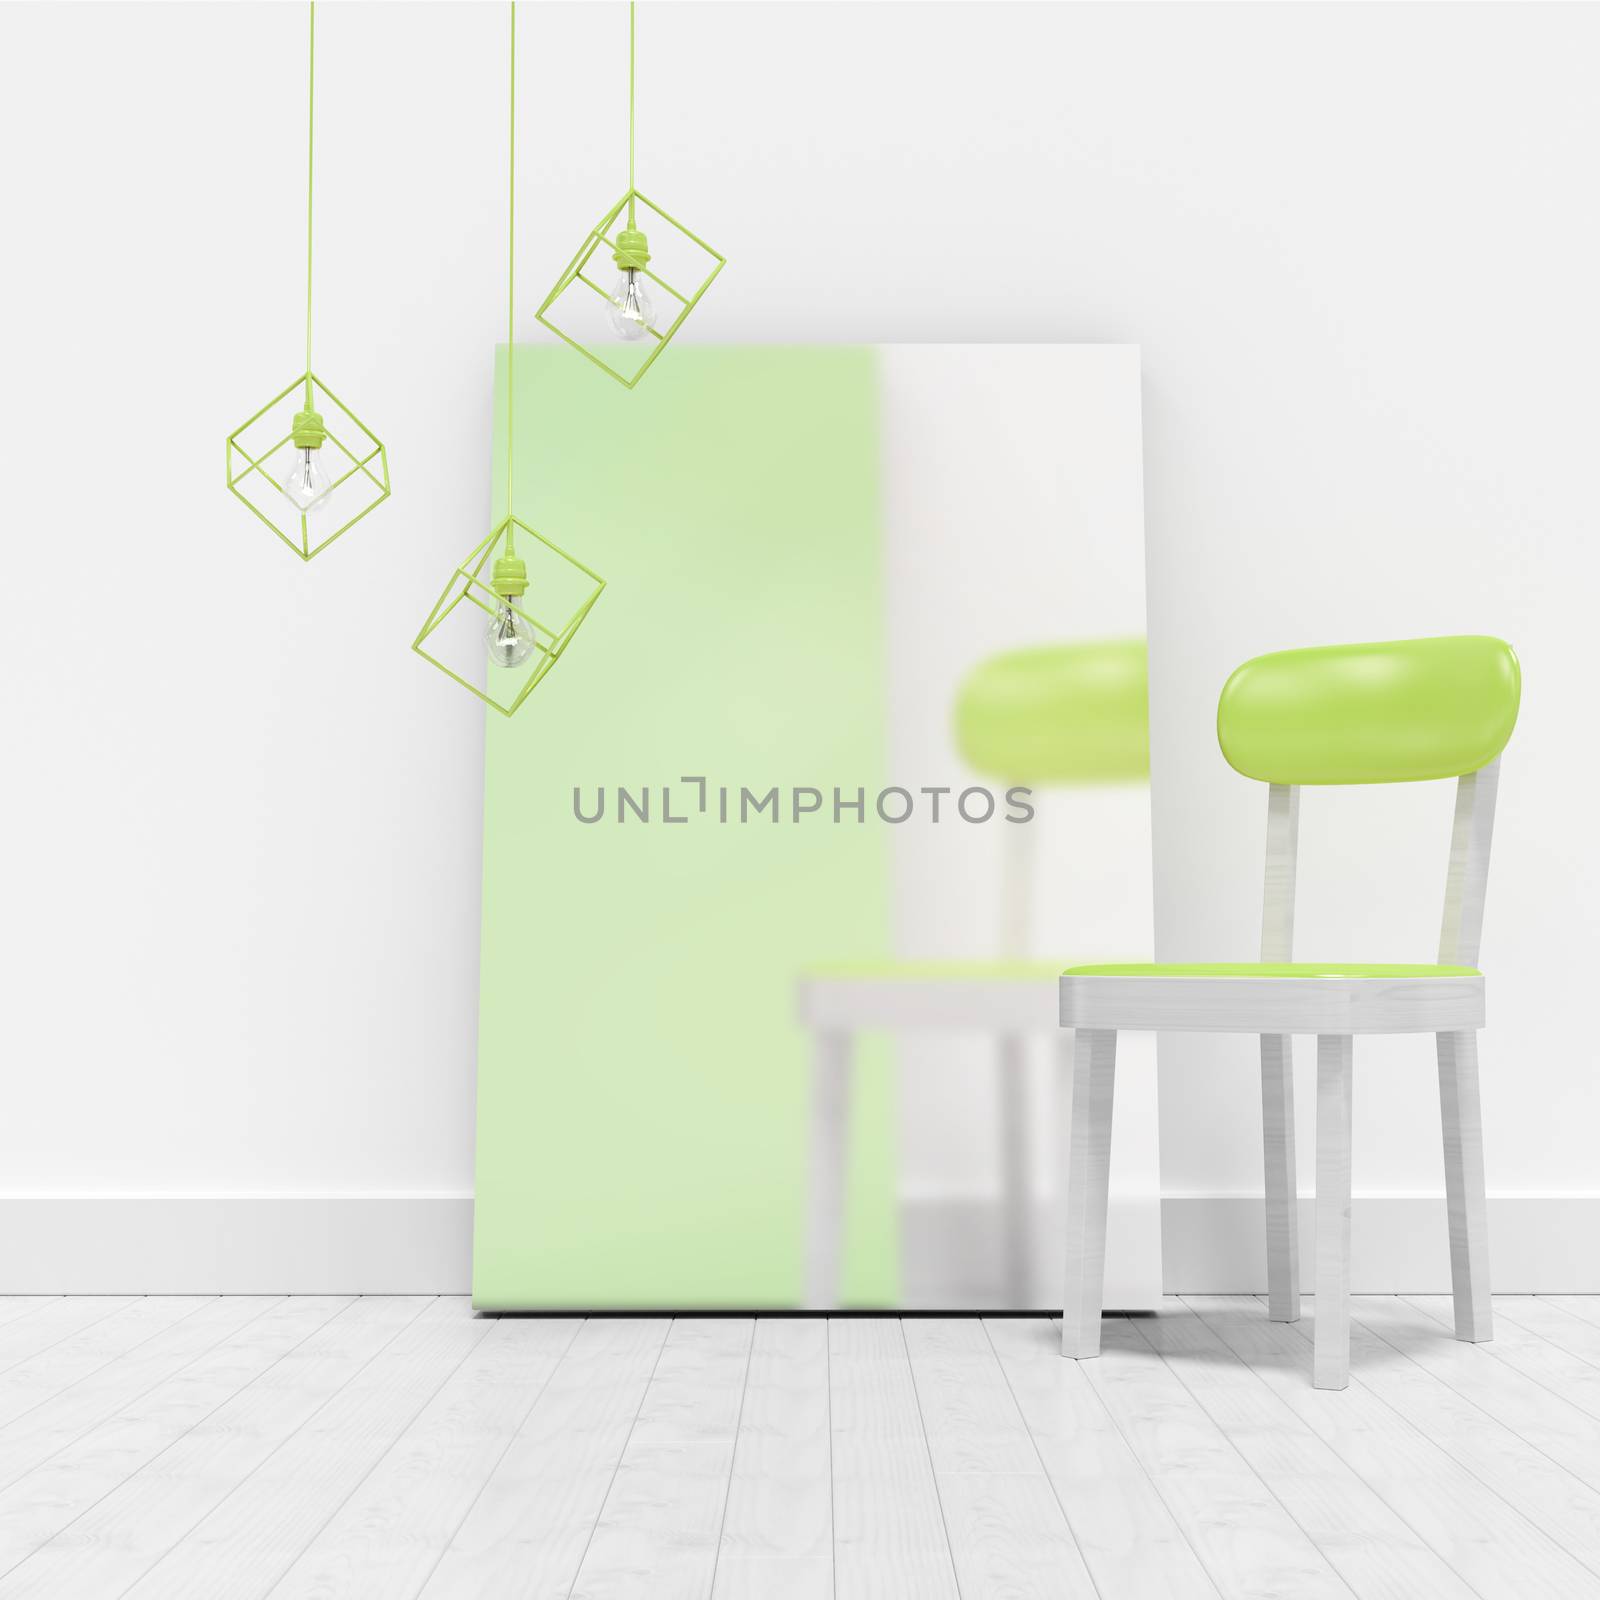 Green chair by blank whiteboard against wall  by Wavebreakmedia